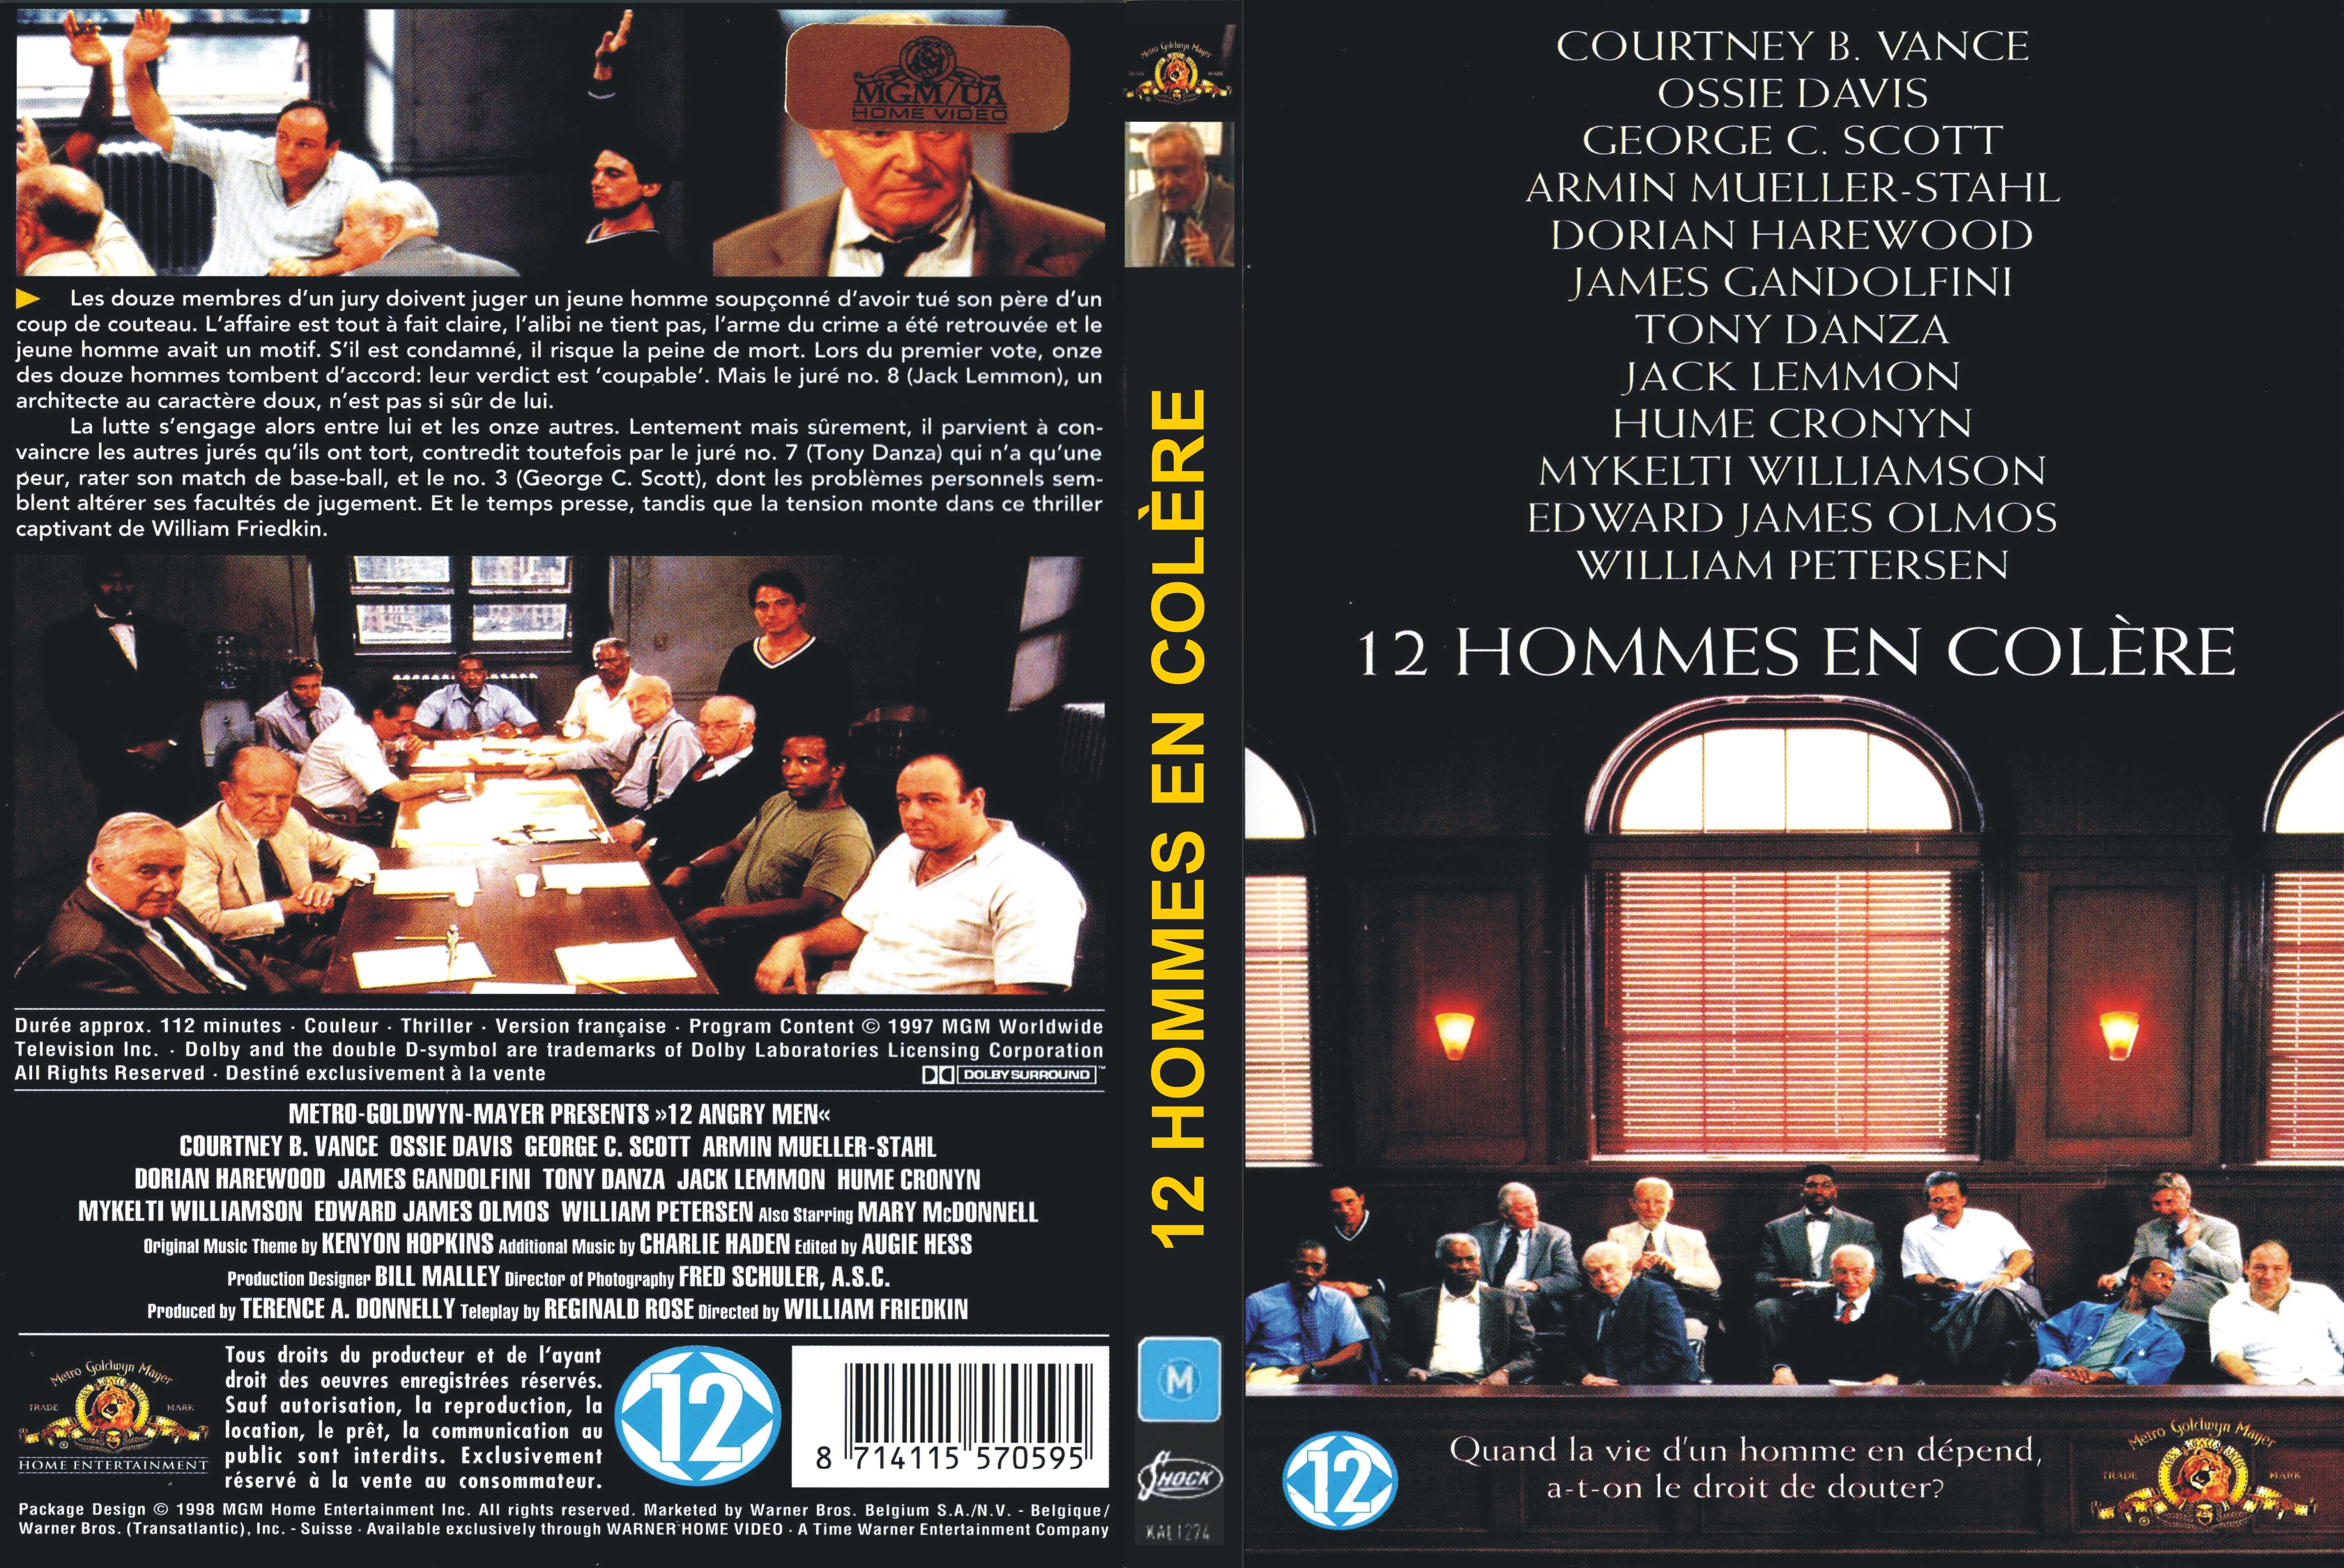 Jaquette DVD 12 hommes en colre (1997) custom